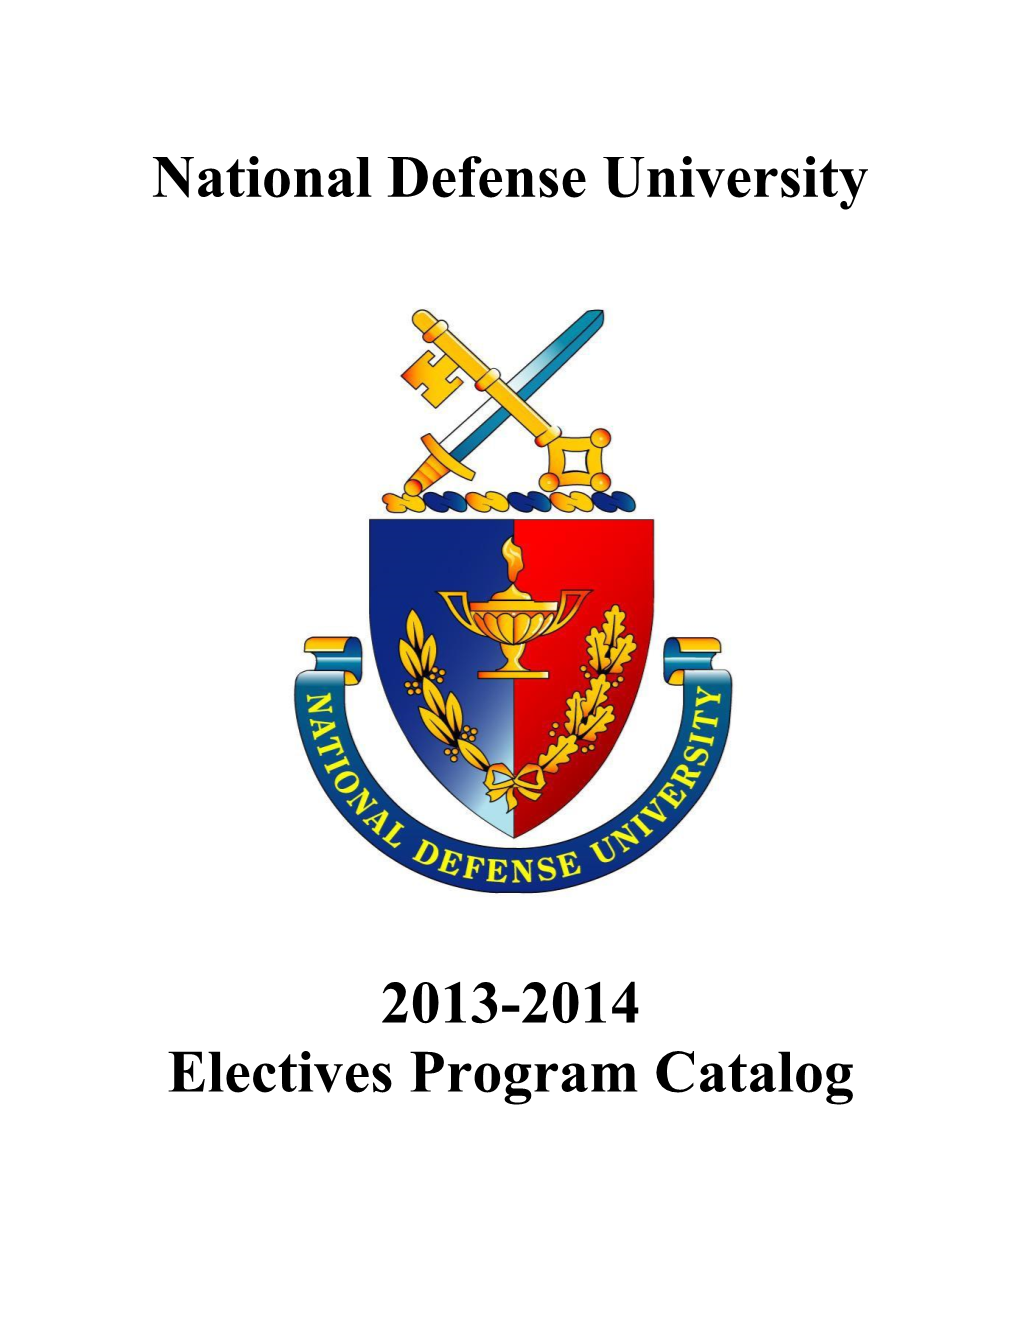 National Defense University 2013-2014 Electives Program Catalog